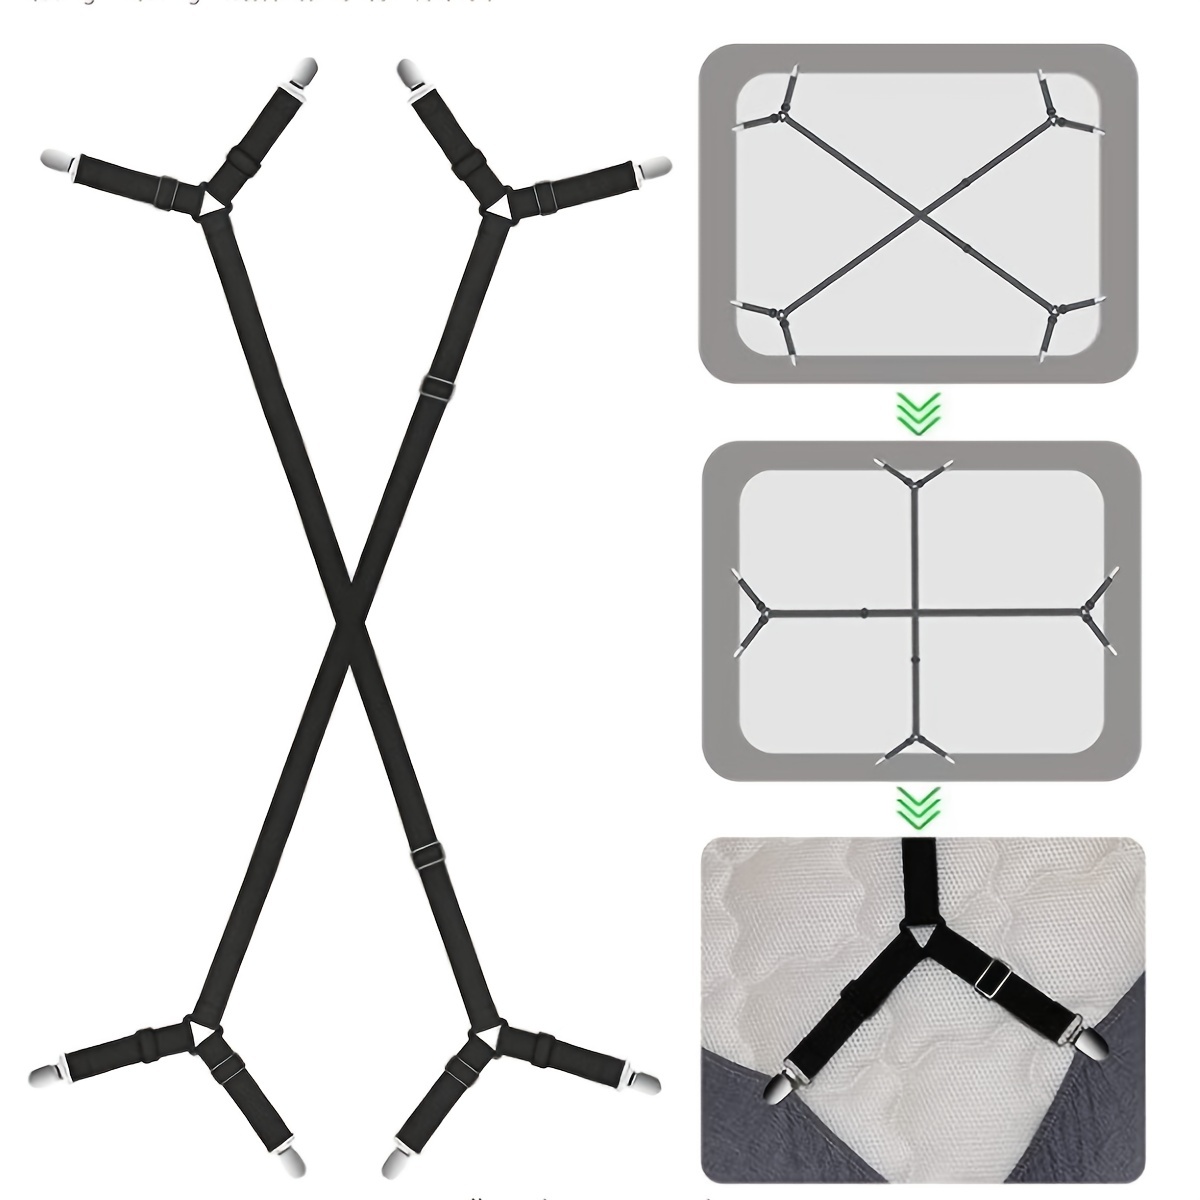 2 Pcs Crisscross Black Bed Sheet Fasteners Suspenders Holder Straps